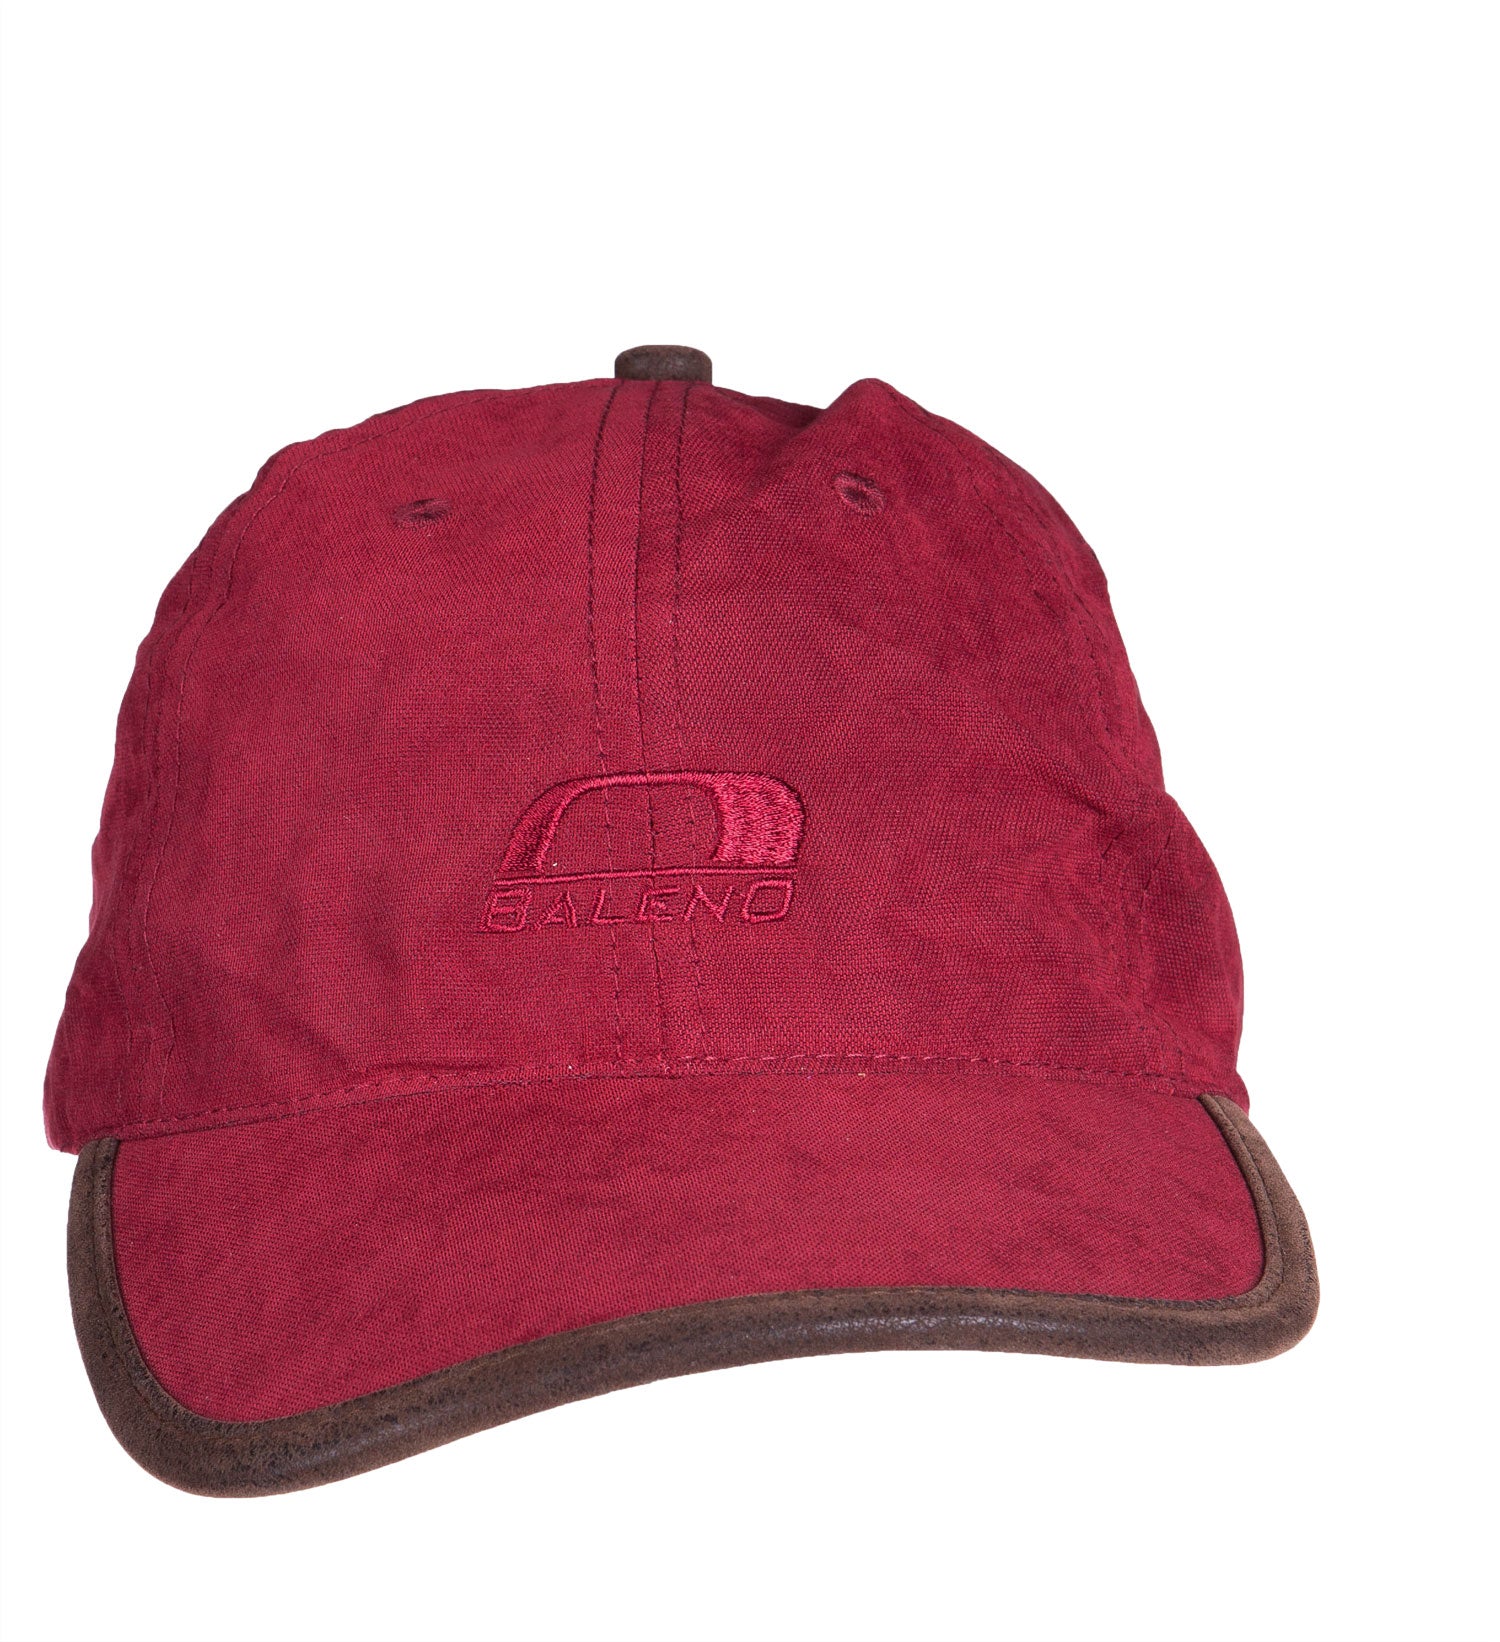 Burgundy red Baseball cap 